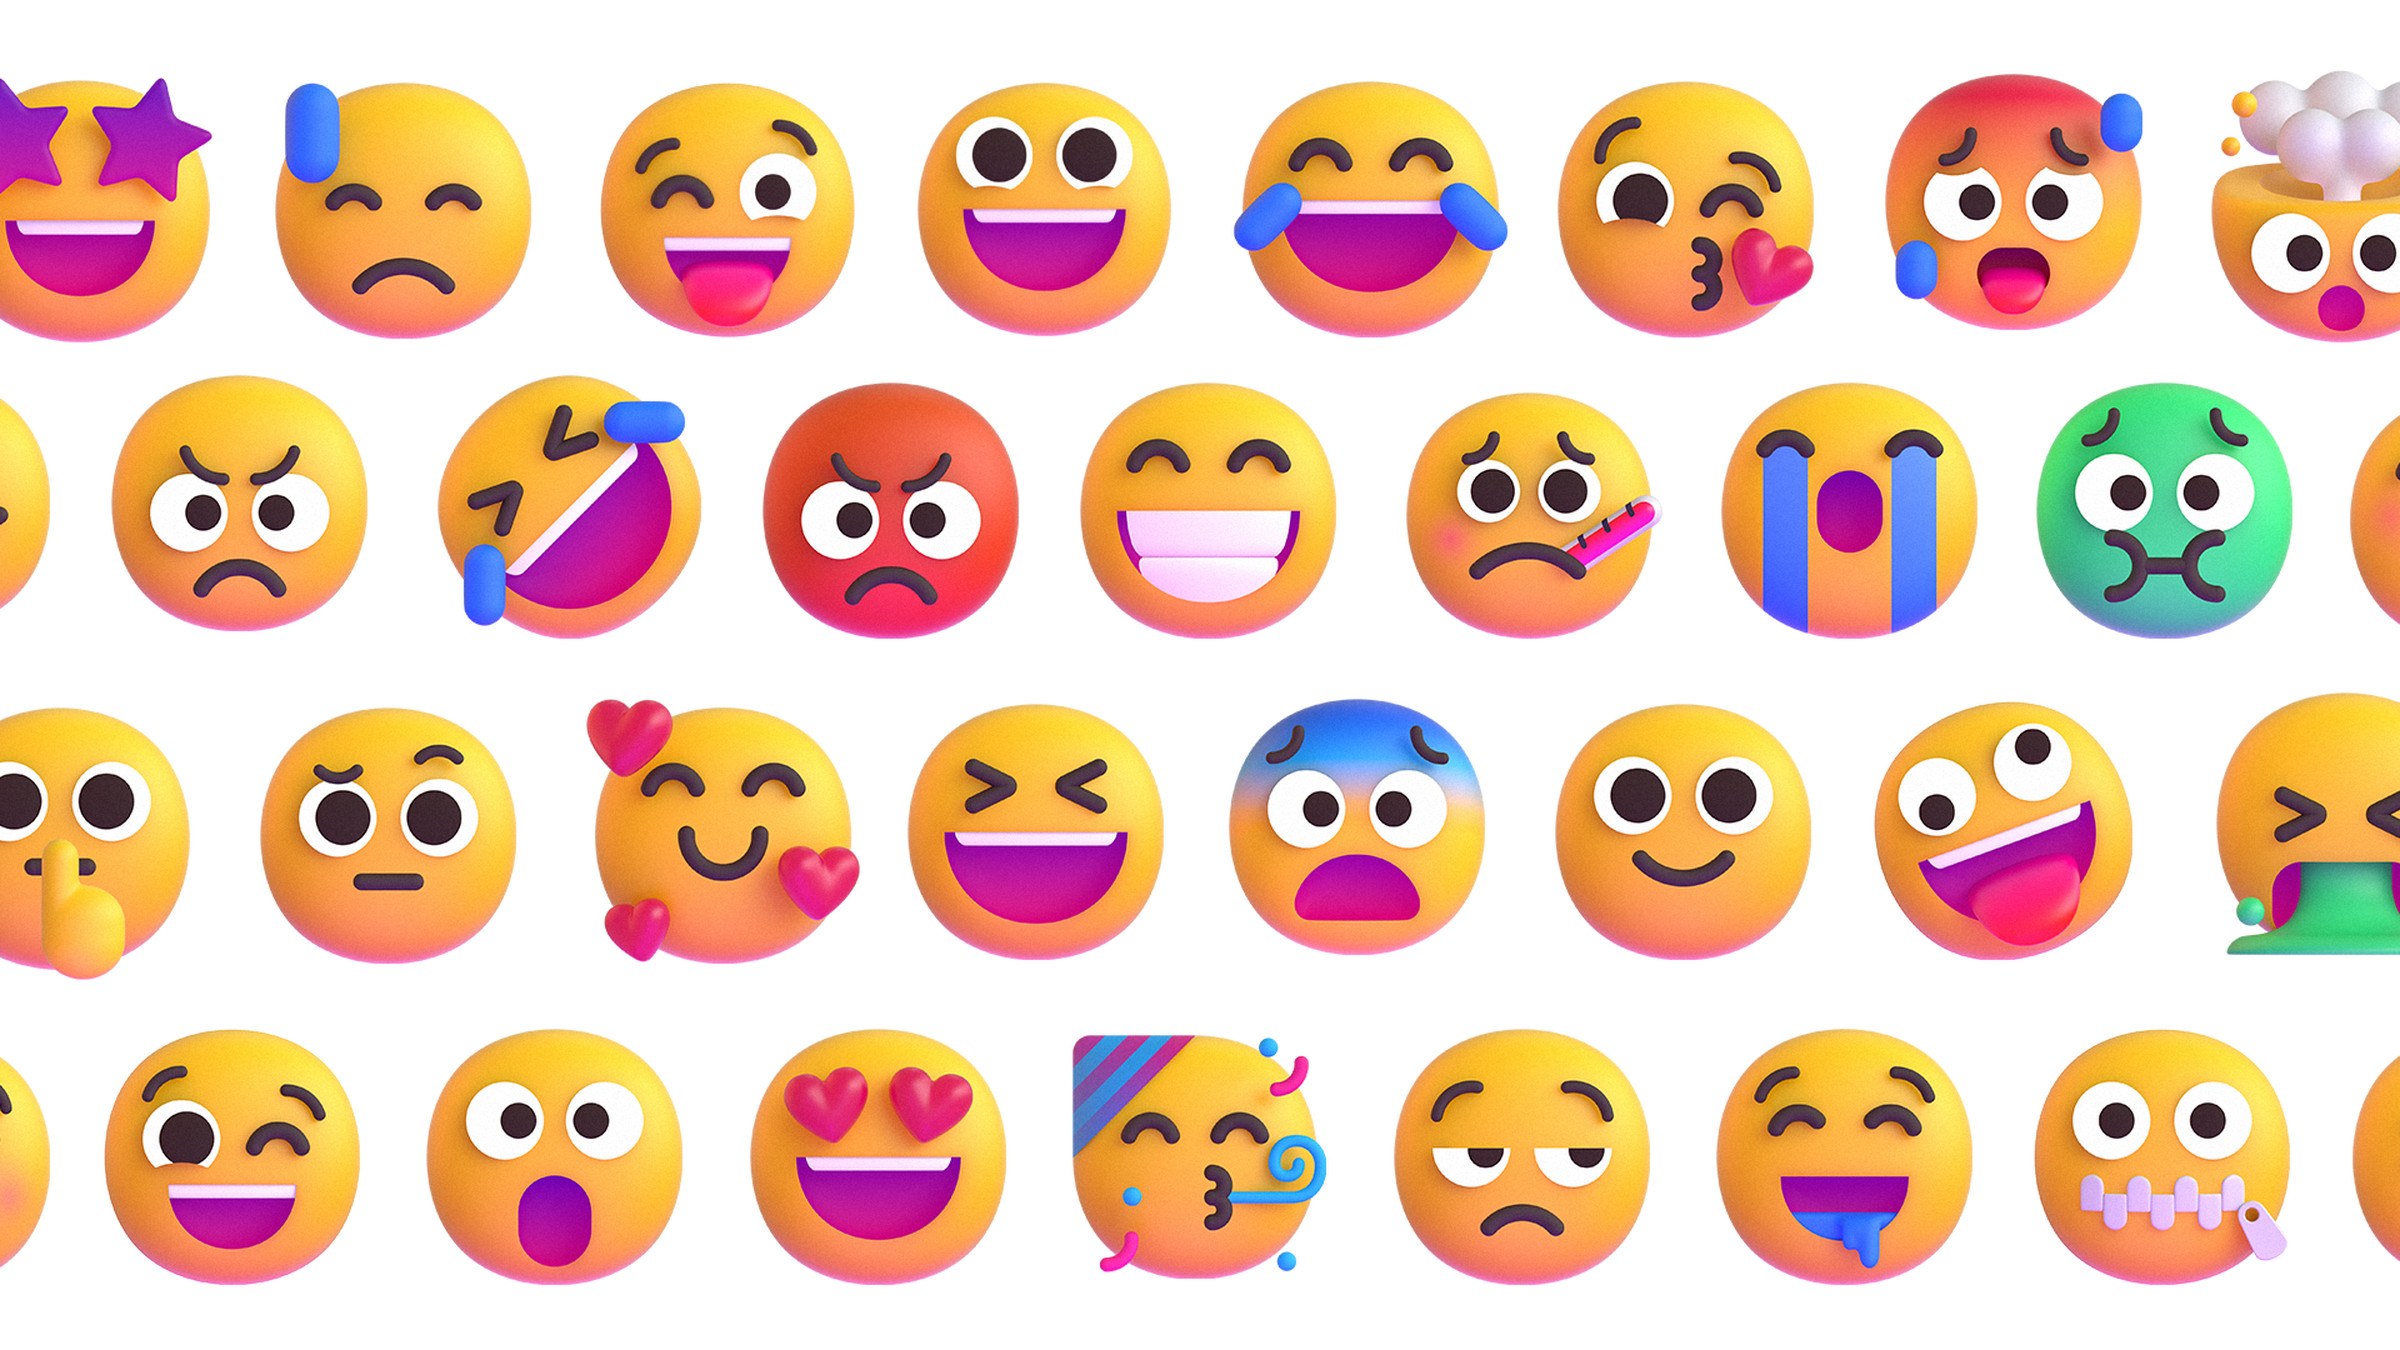 Microsoft’s smiley emoji.